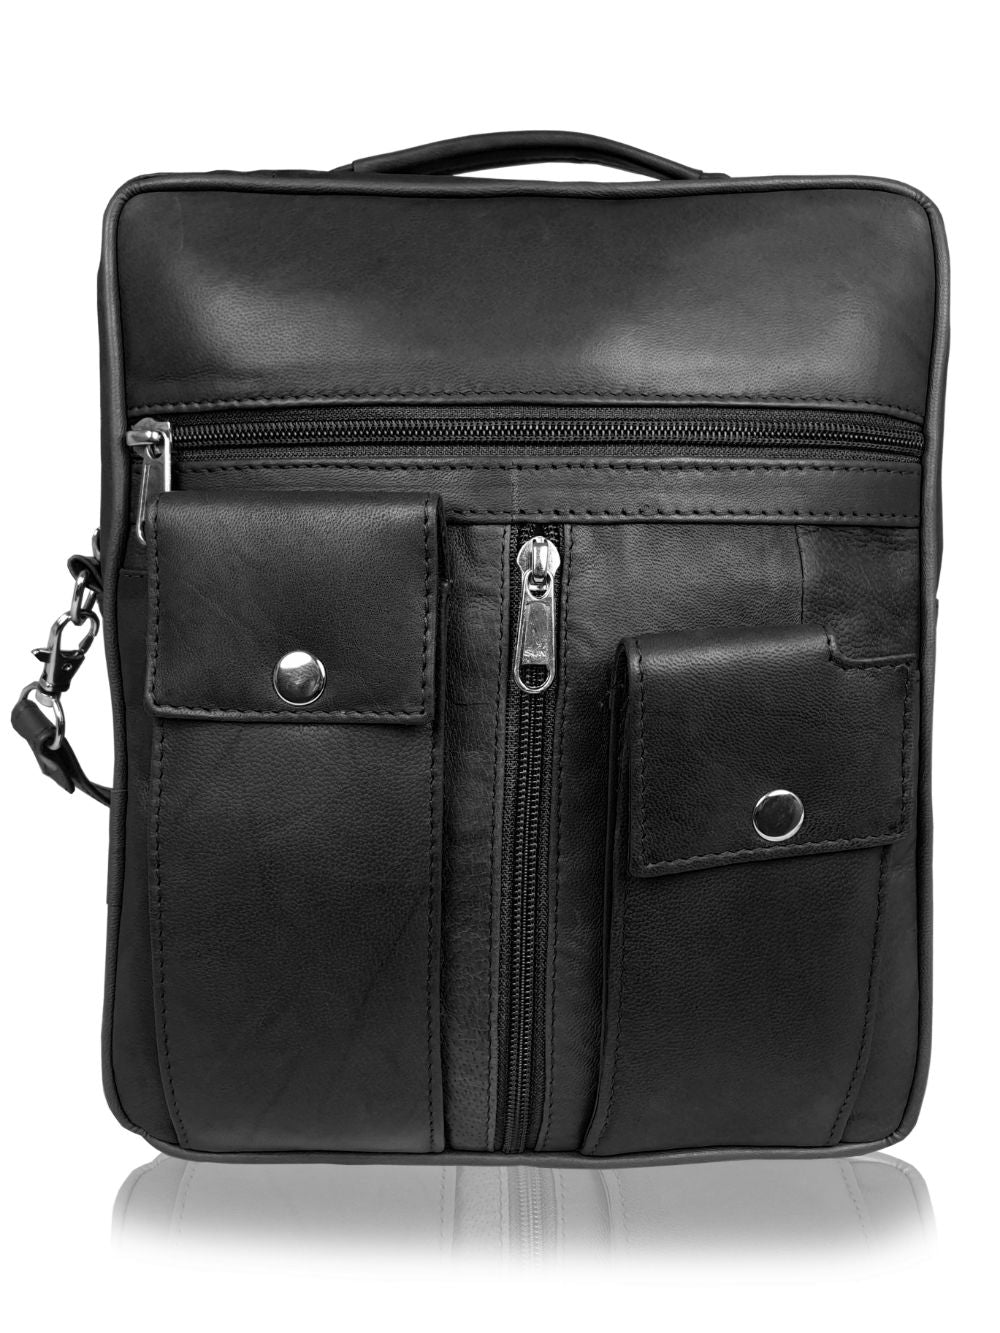 Roamlite Mens Travel Bag Black Leather RL504 front 2